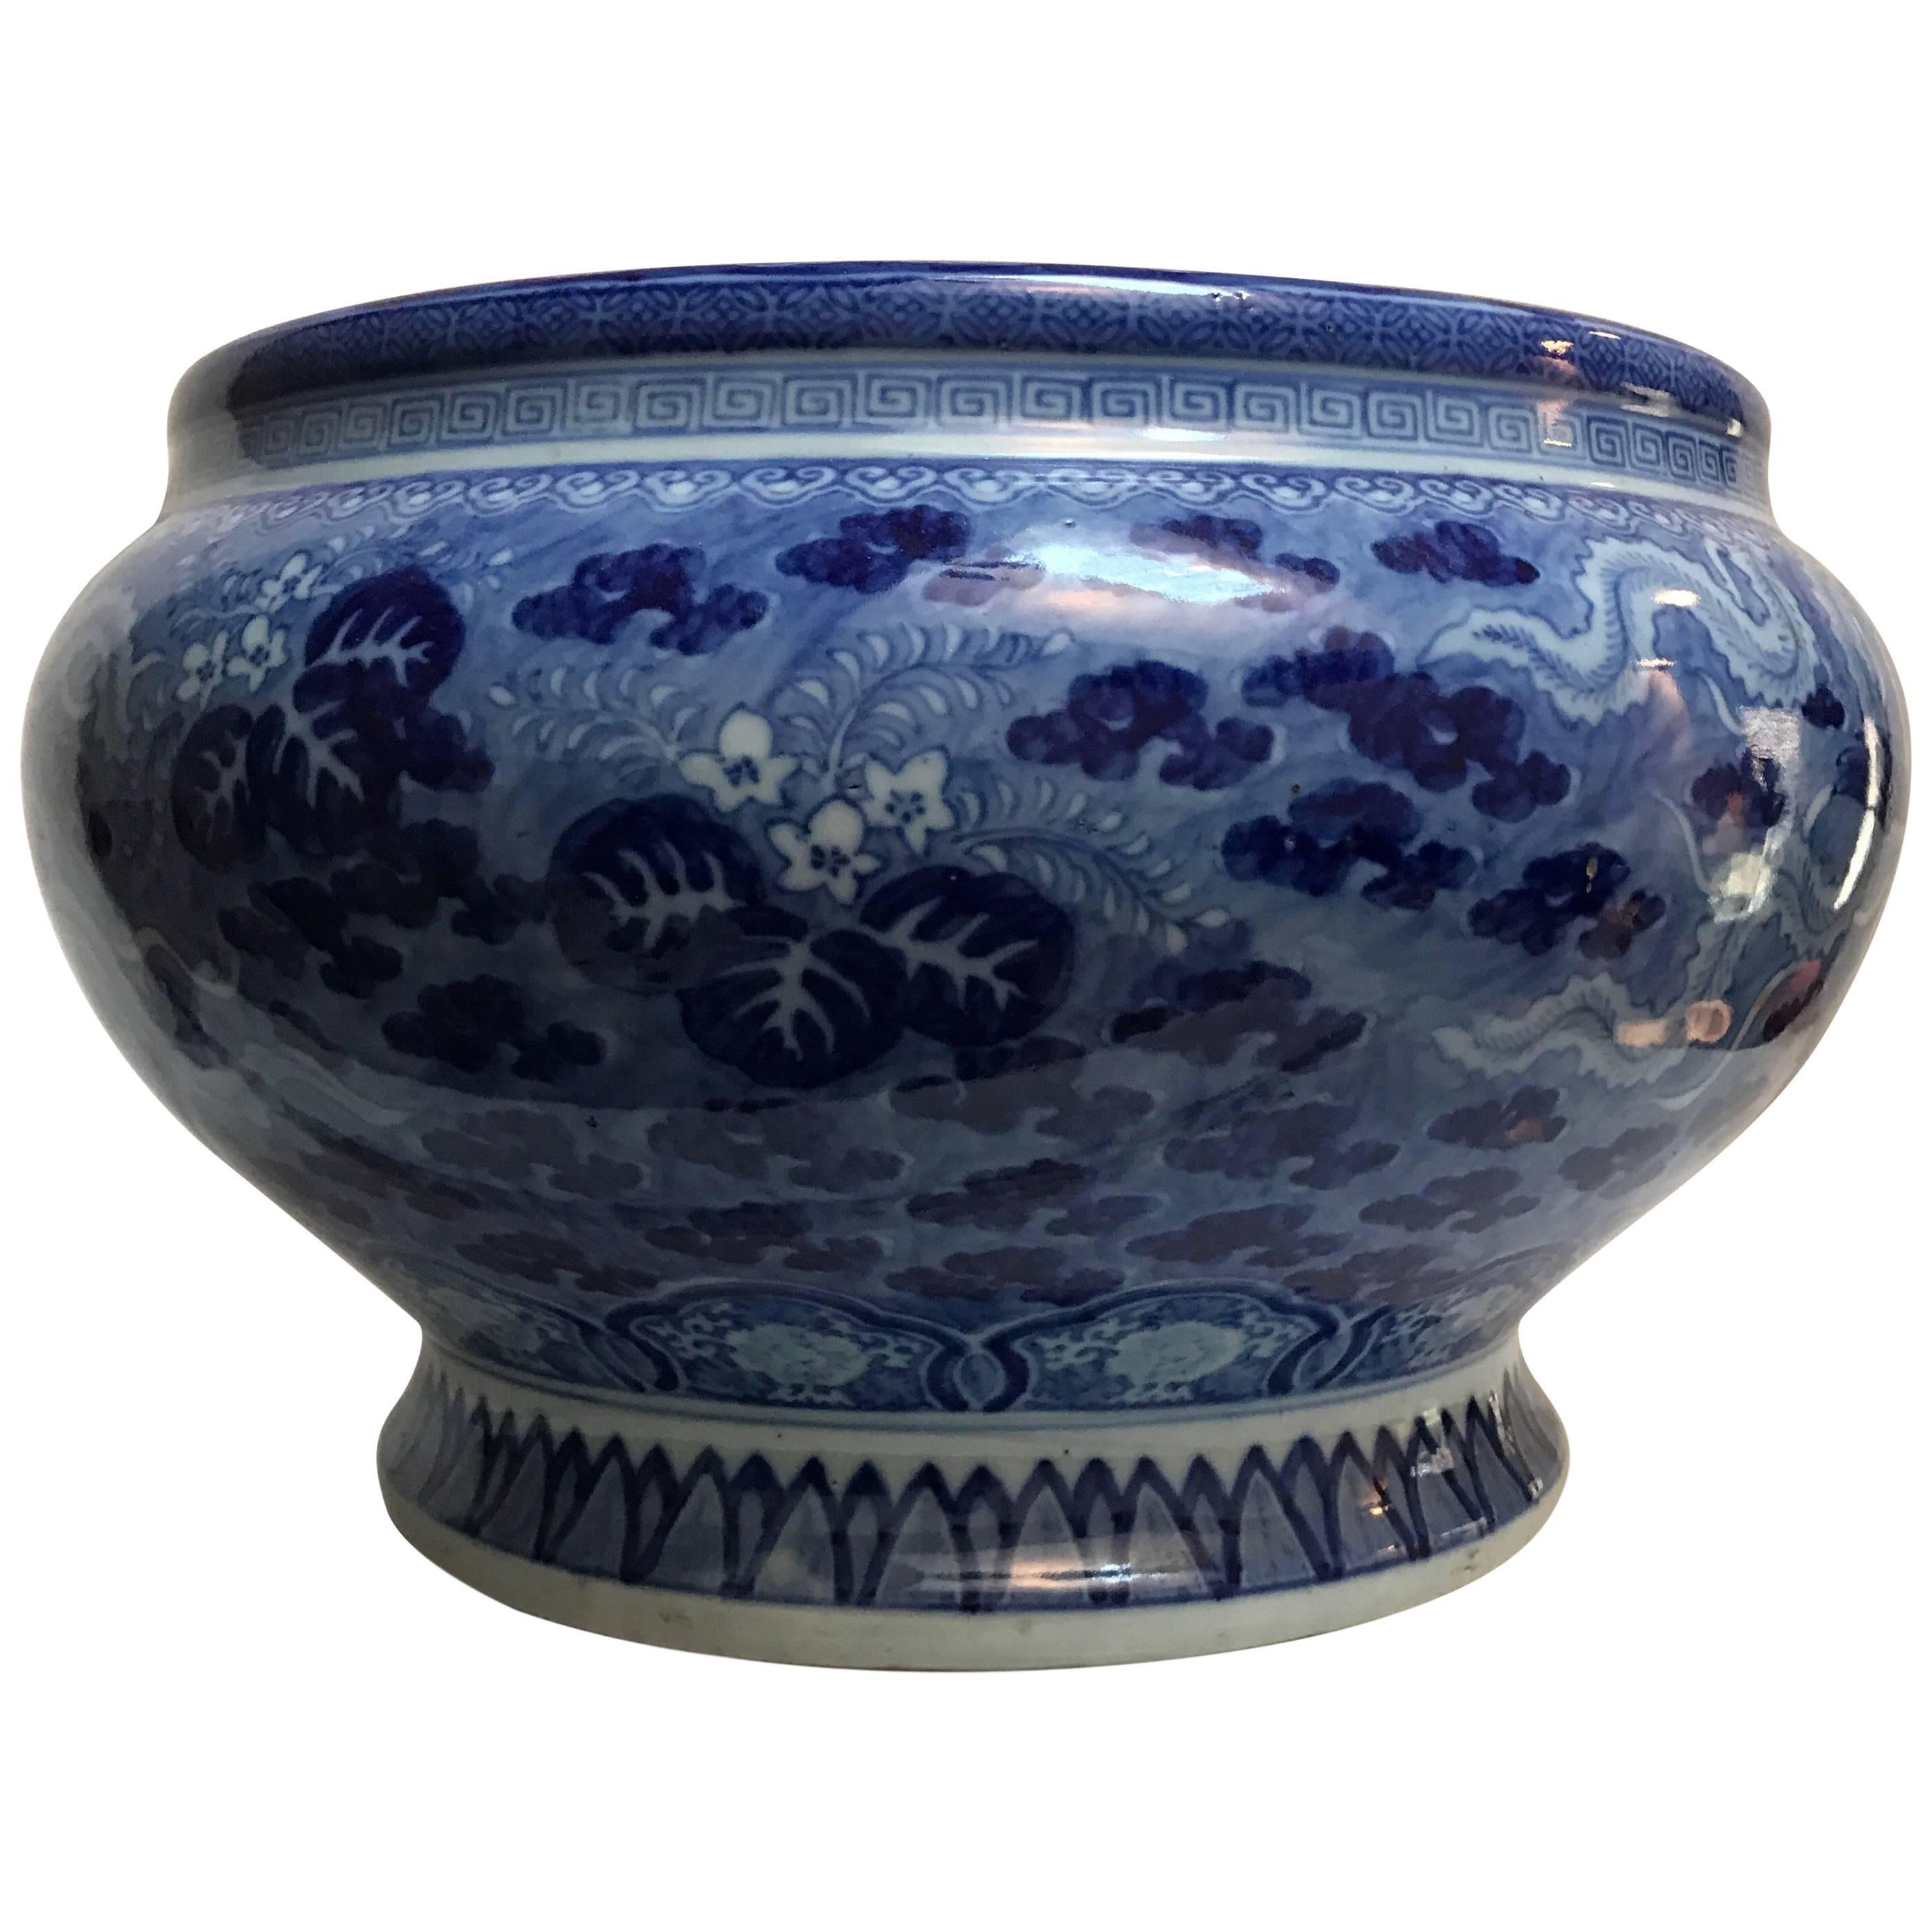 Japanese Blue and White Ceramic Fishbowl Planter Jardinière Cachepot